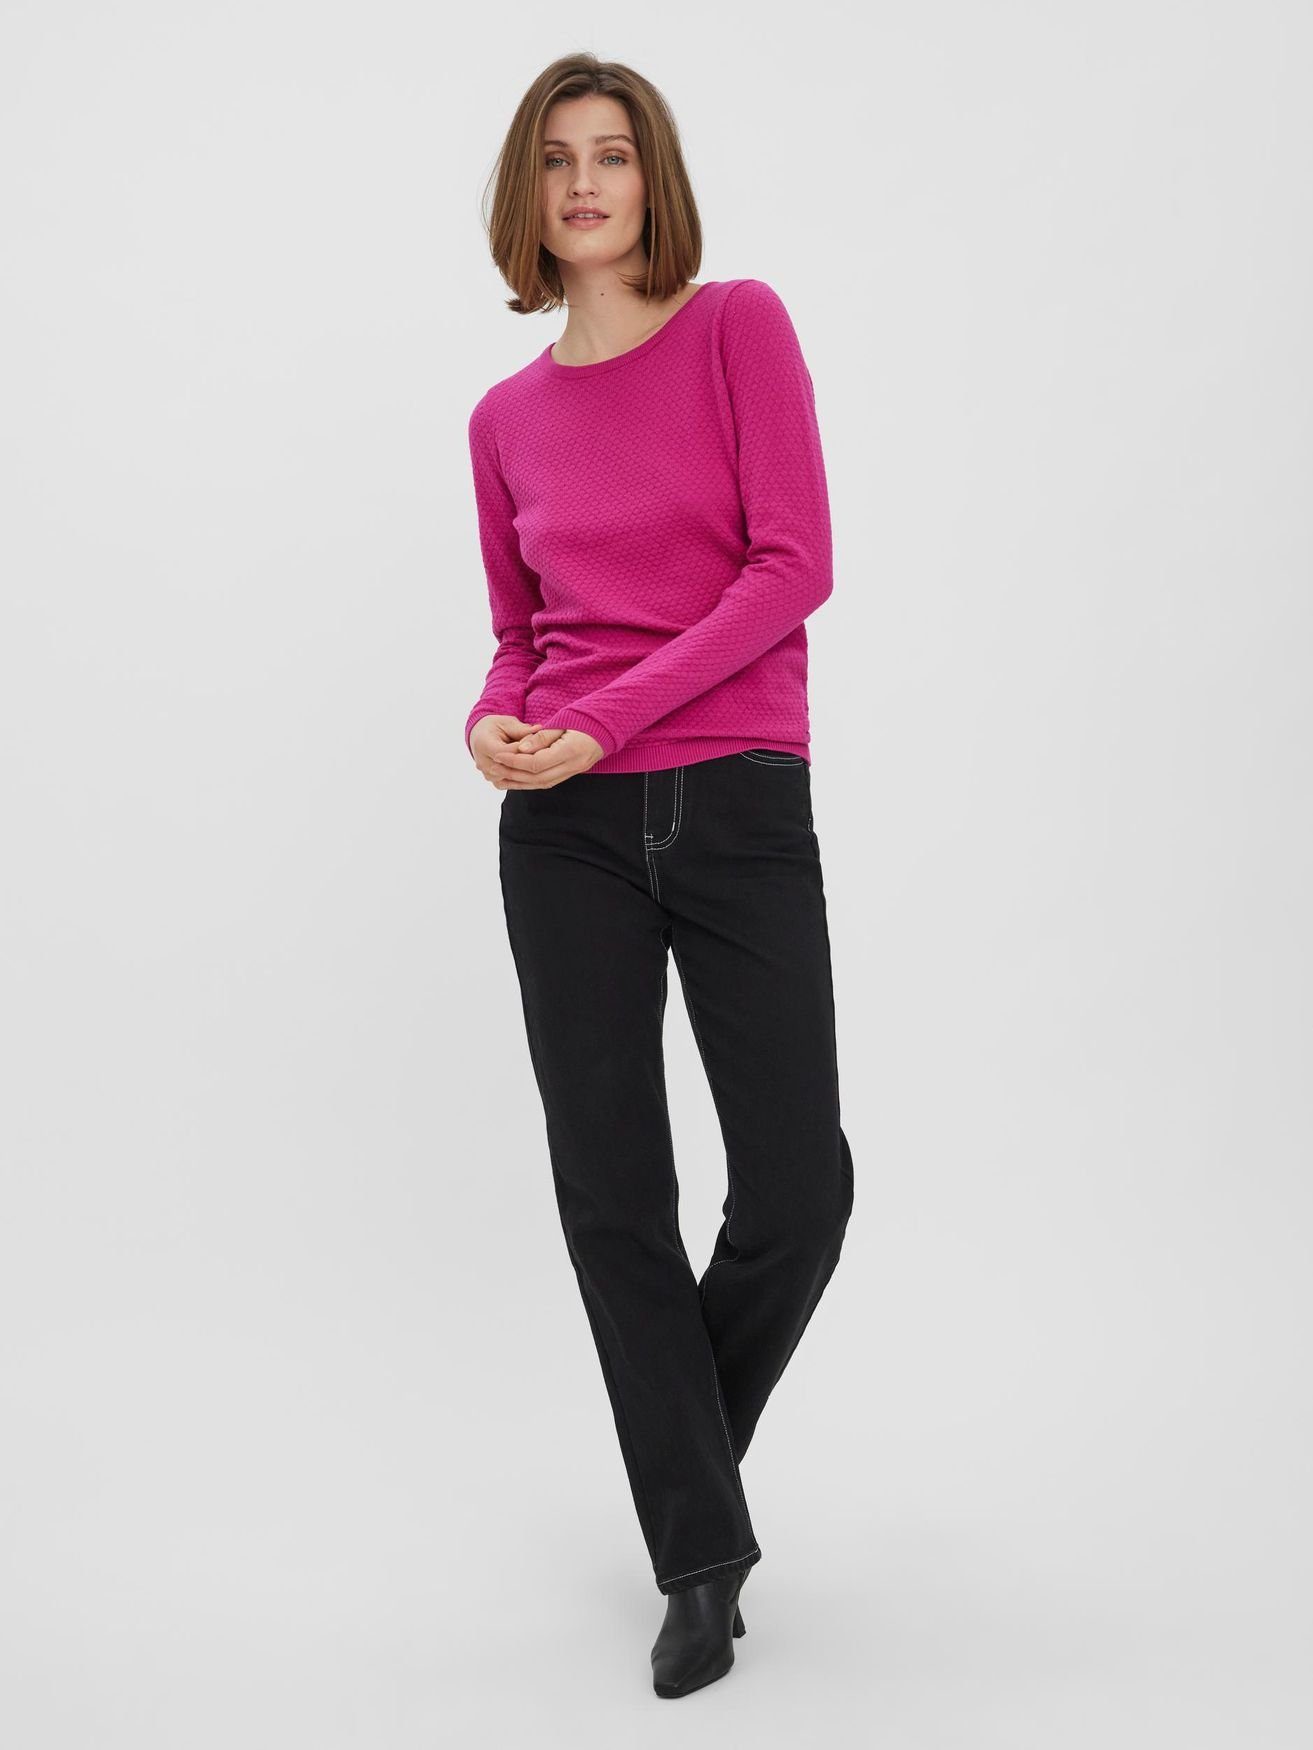 VMCARE Vero Feinstrick Pink Pullover in Moda Longsleeve Struktur Strickpullover Rundhals 4592